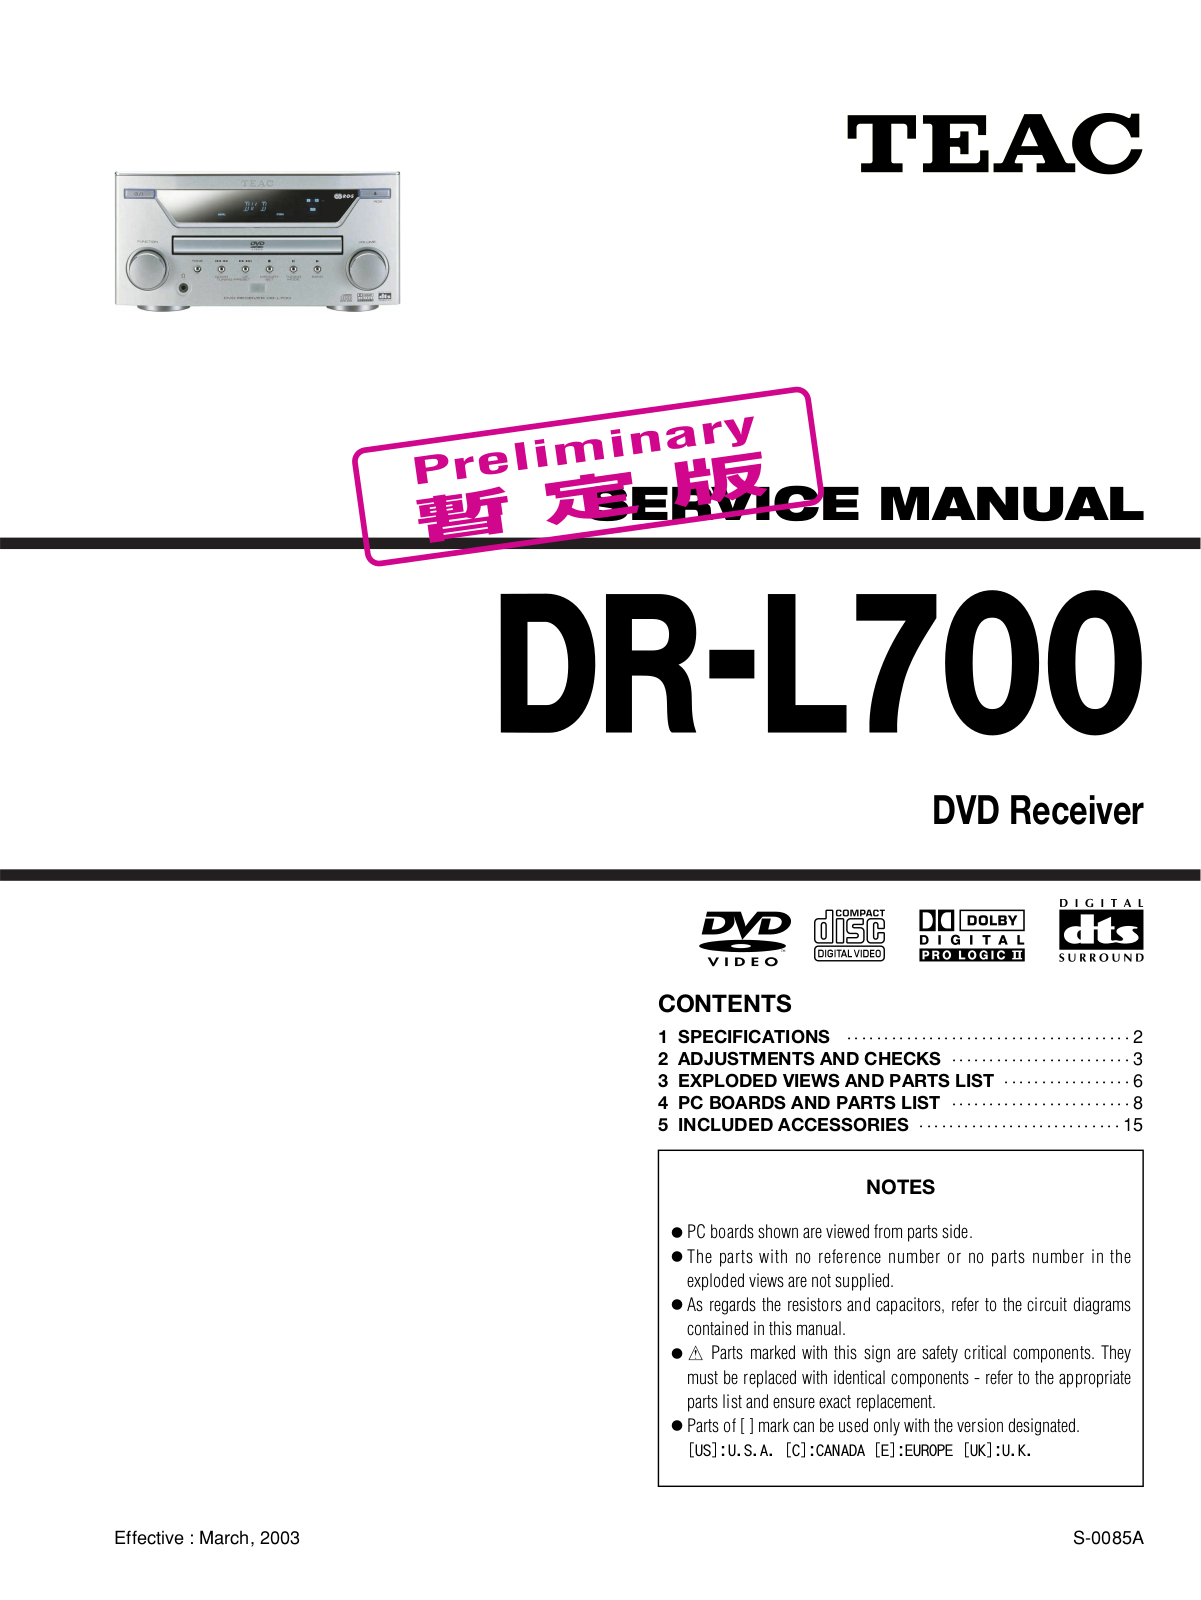 TEAC DRL-700 Service manual